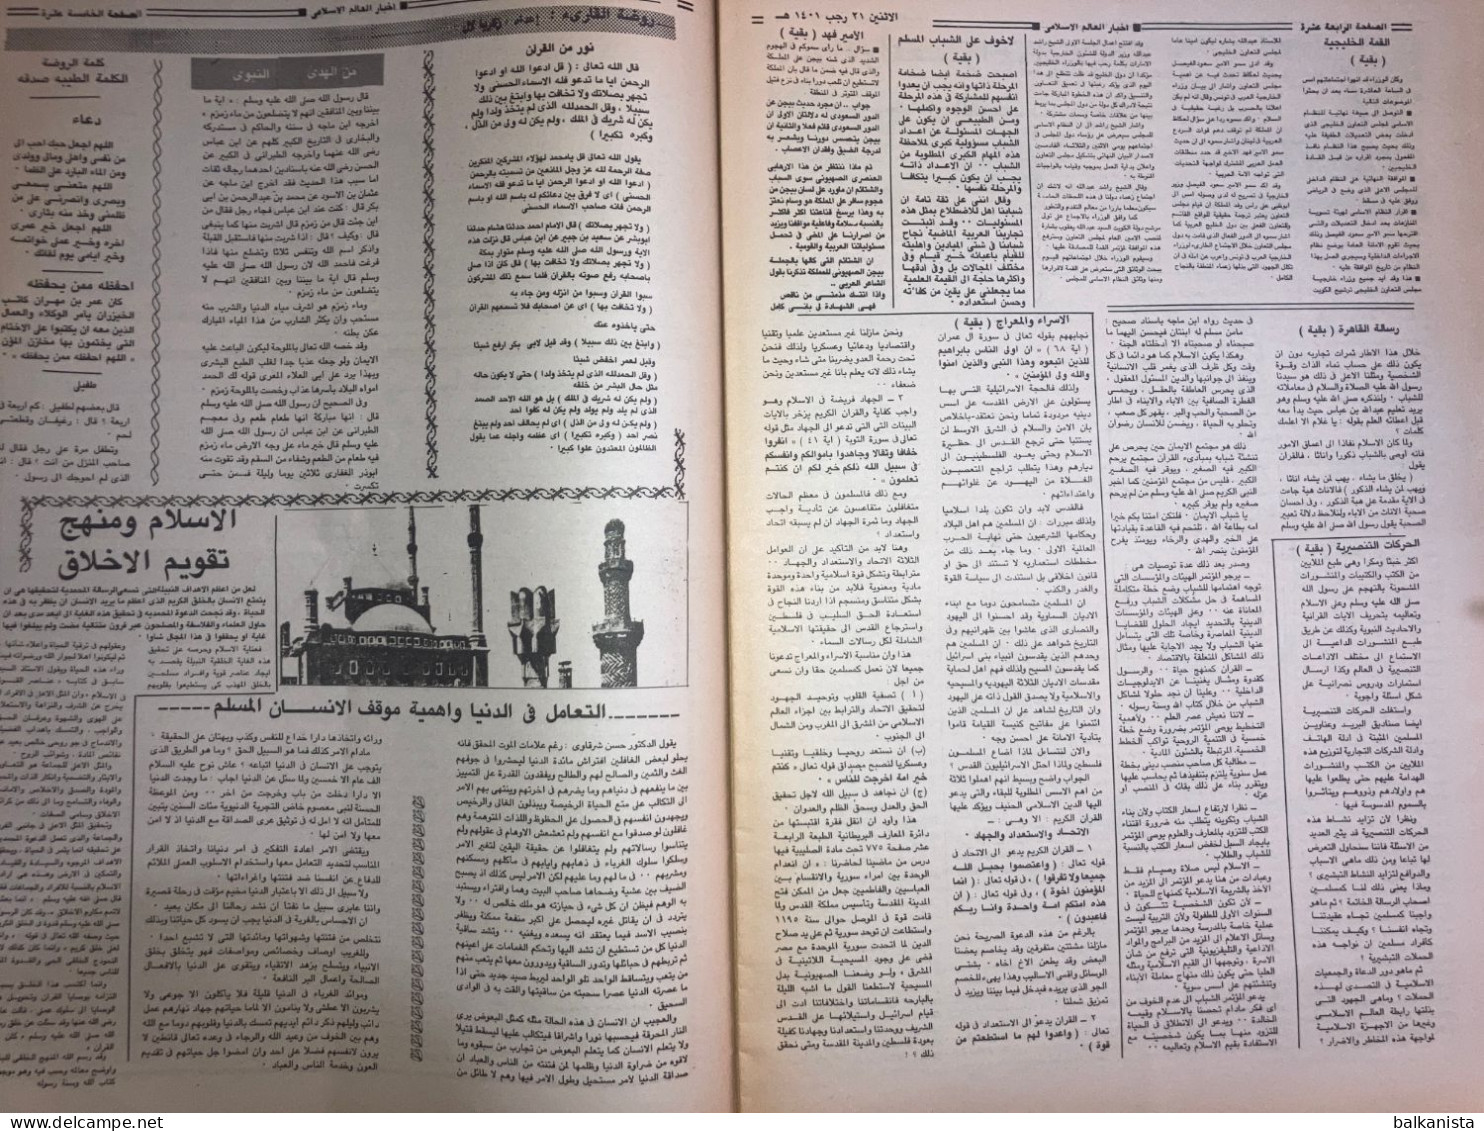 Saudi Arabia Akhbar al-Alam al-Islami Newspaper 25 May 1981